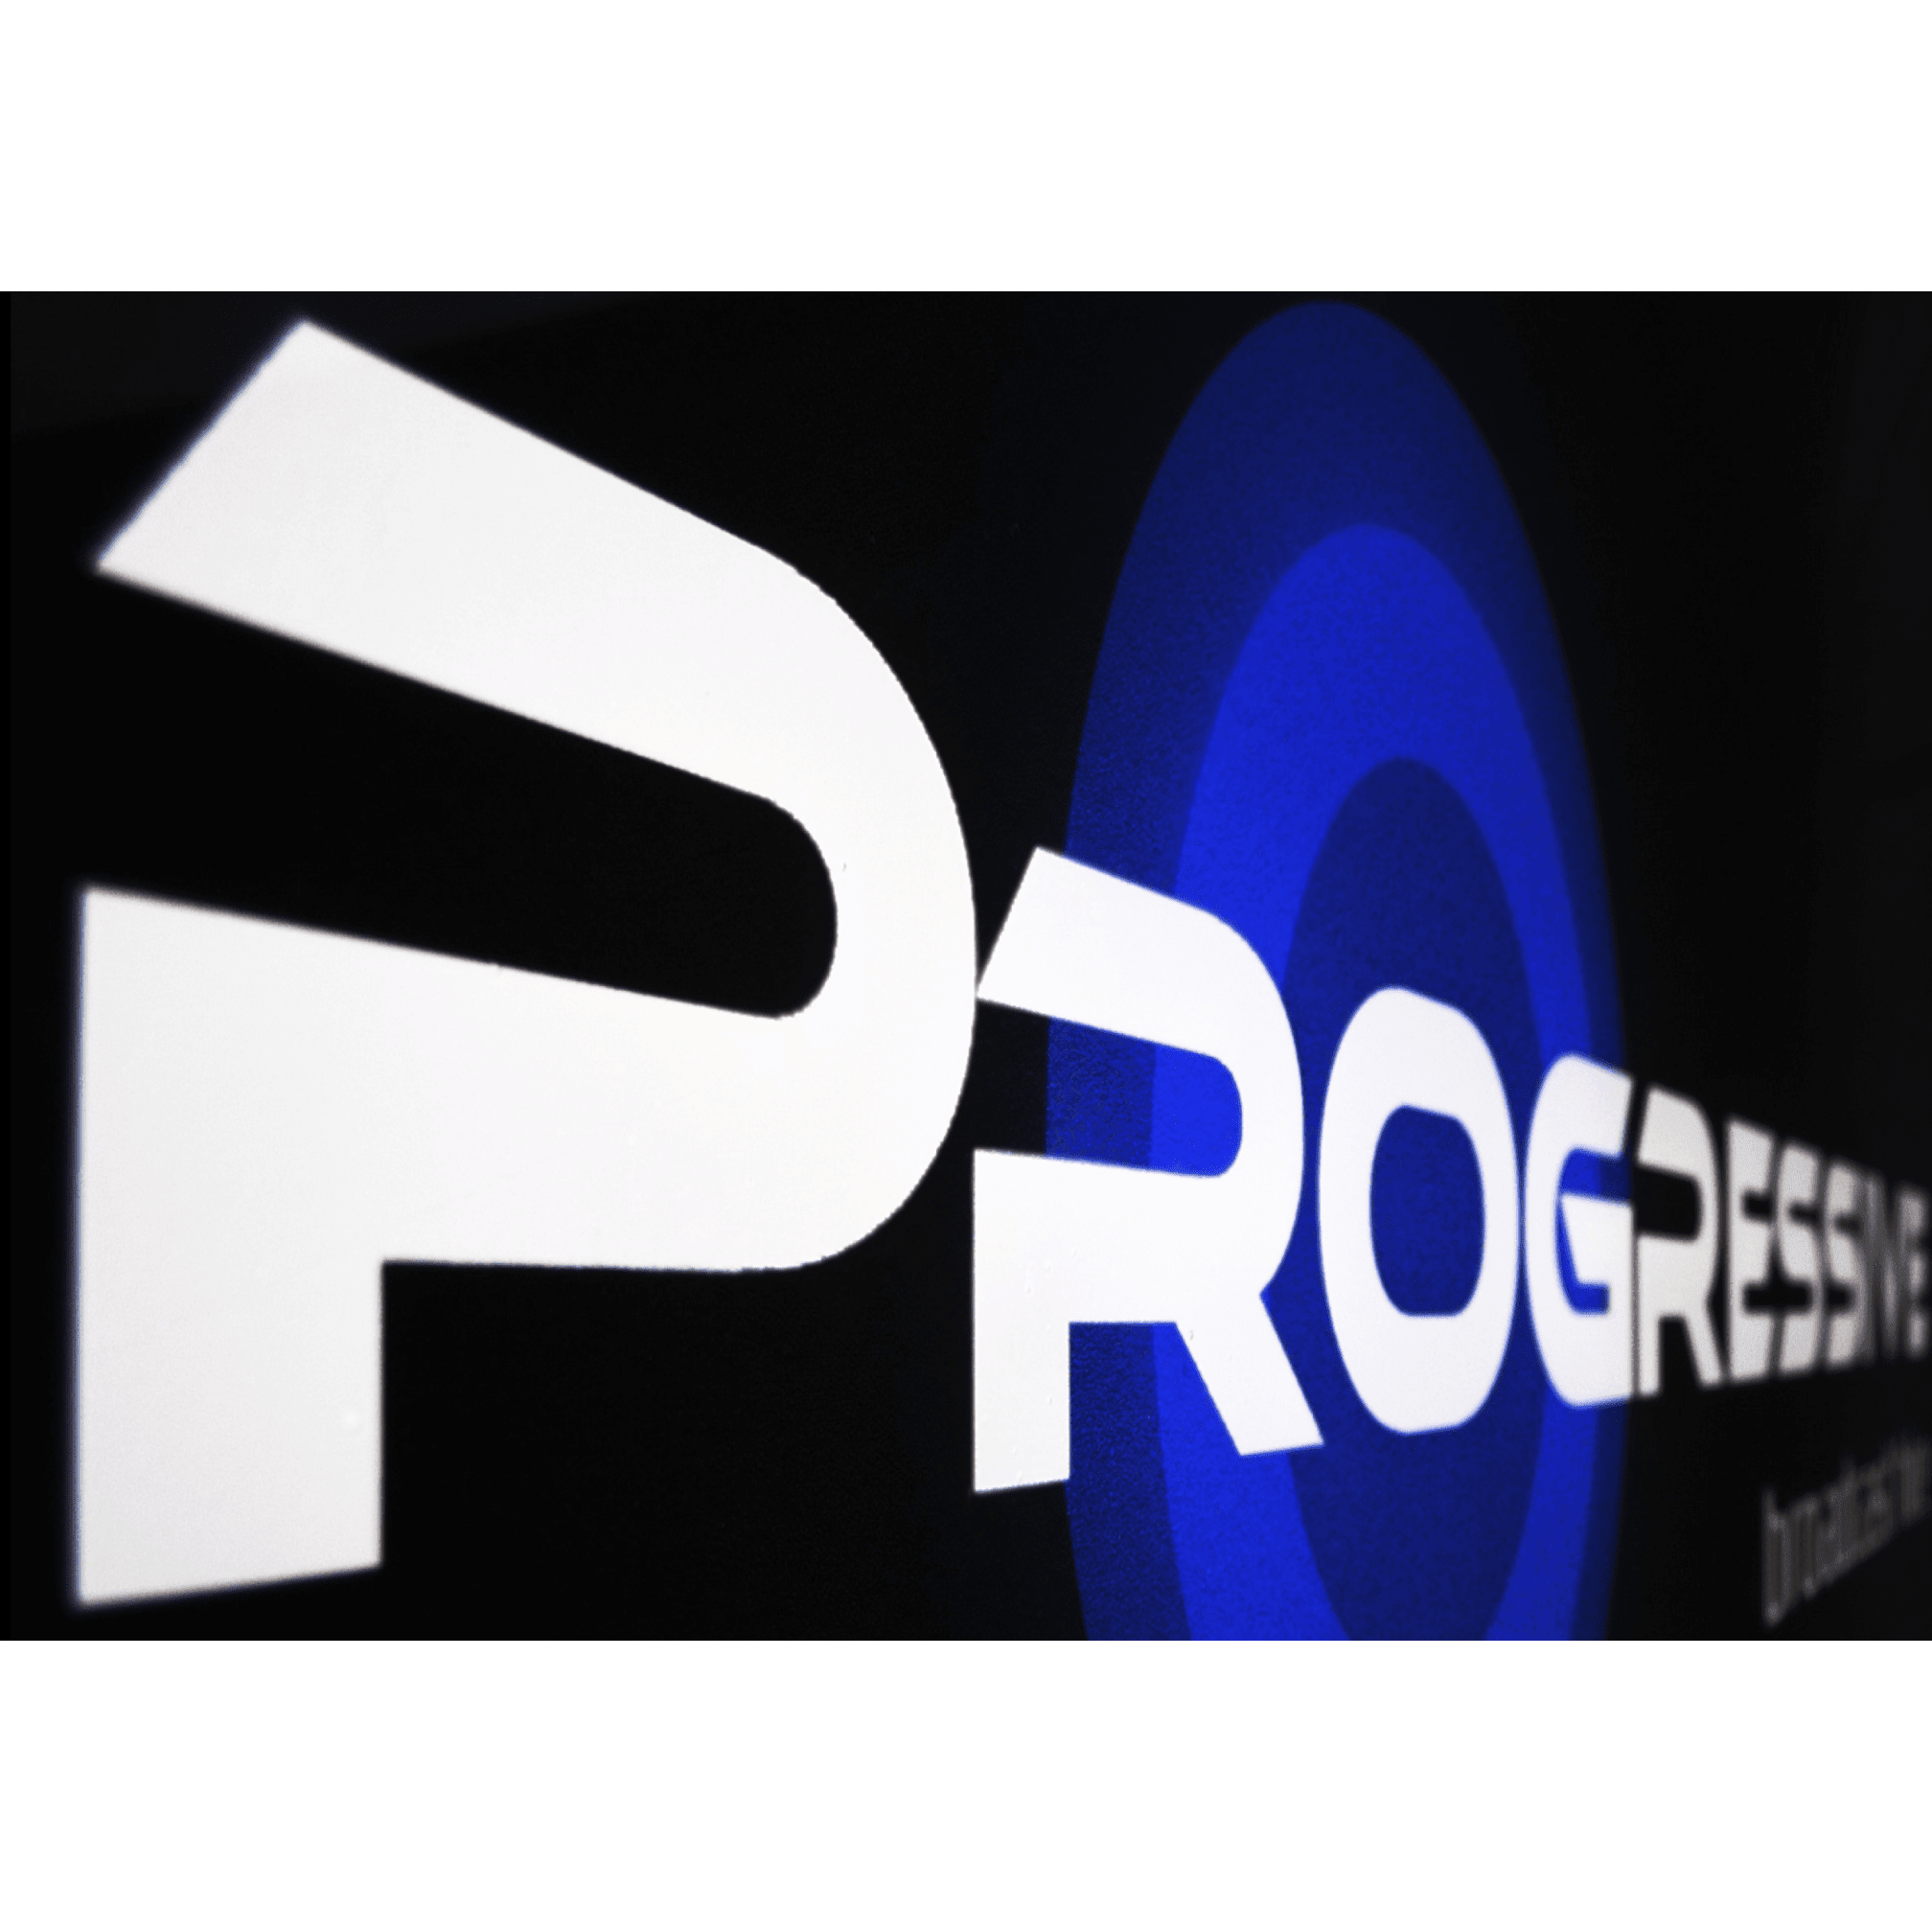 LOGO Progressive Broadcast Hire Ltd Glasgow 01414 202053